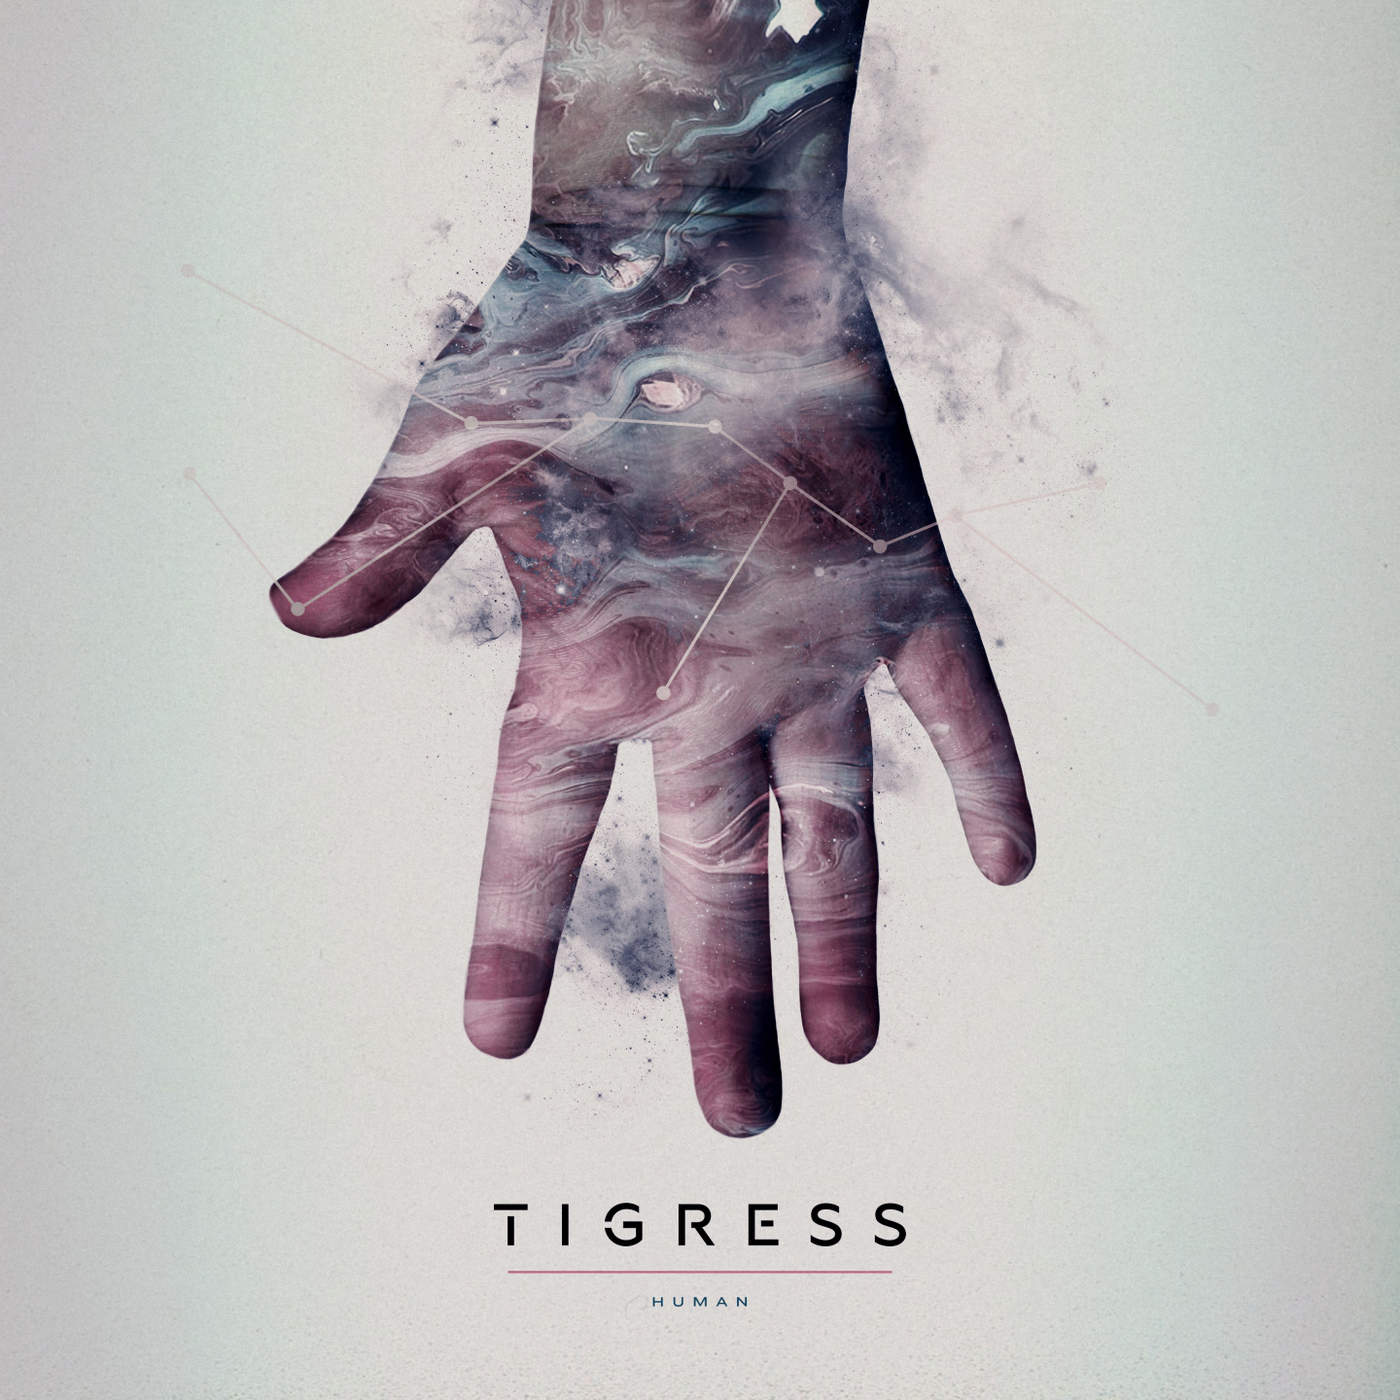 Tigress - Human [EP] (2015) Album Info